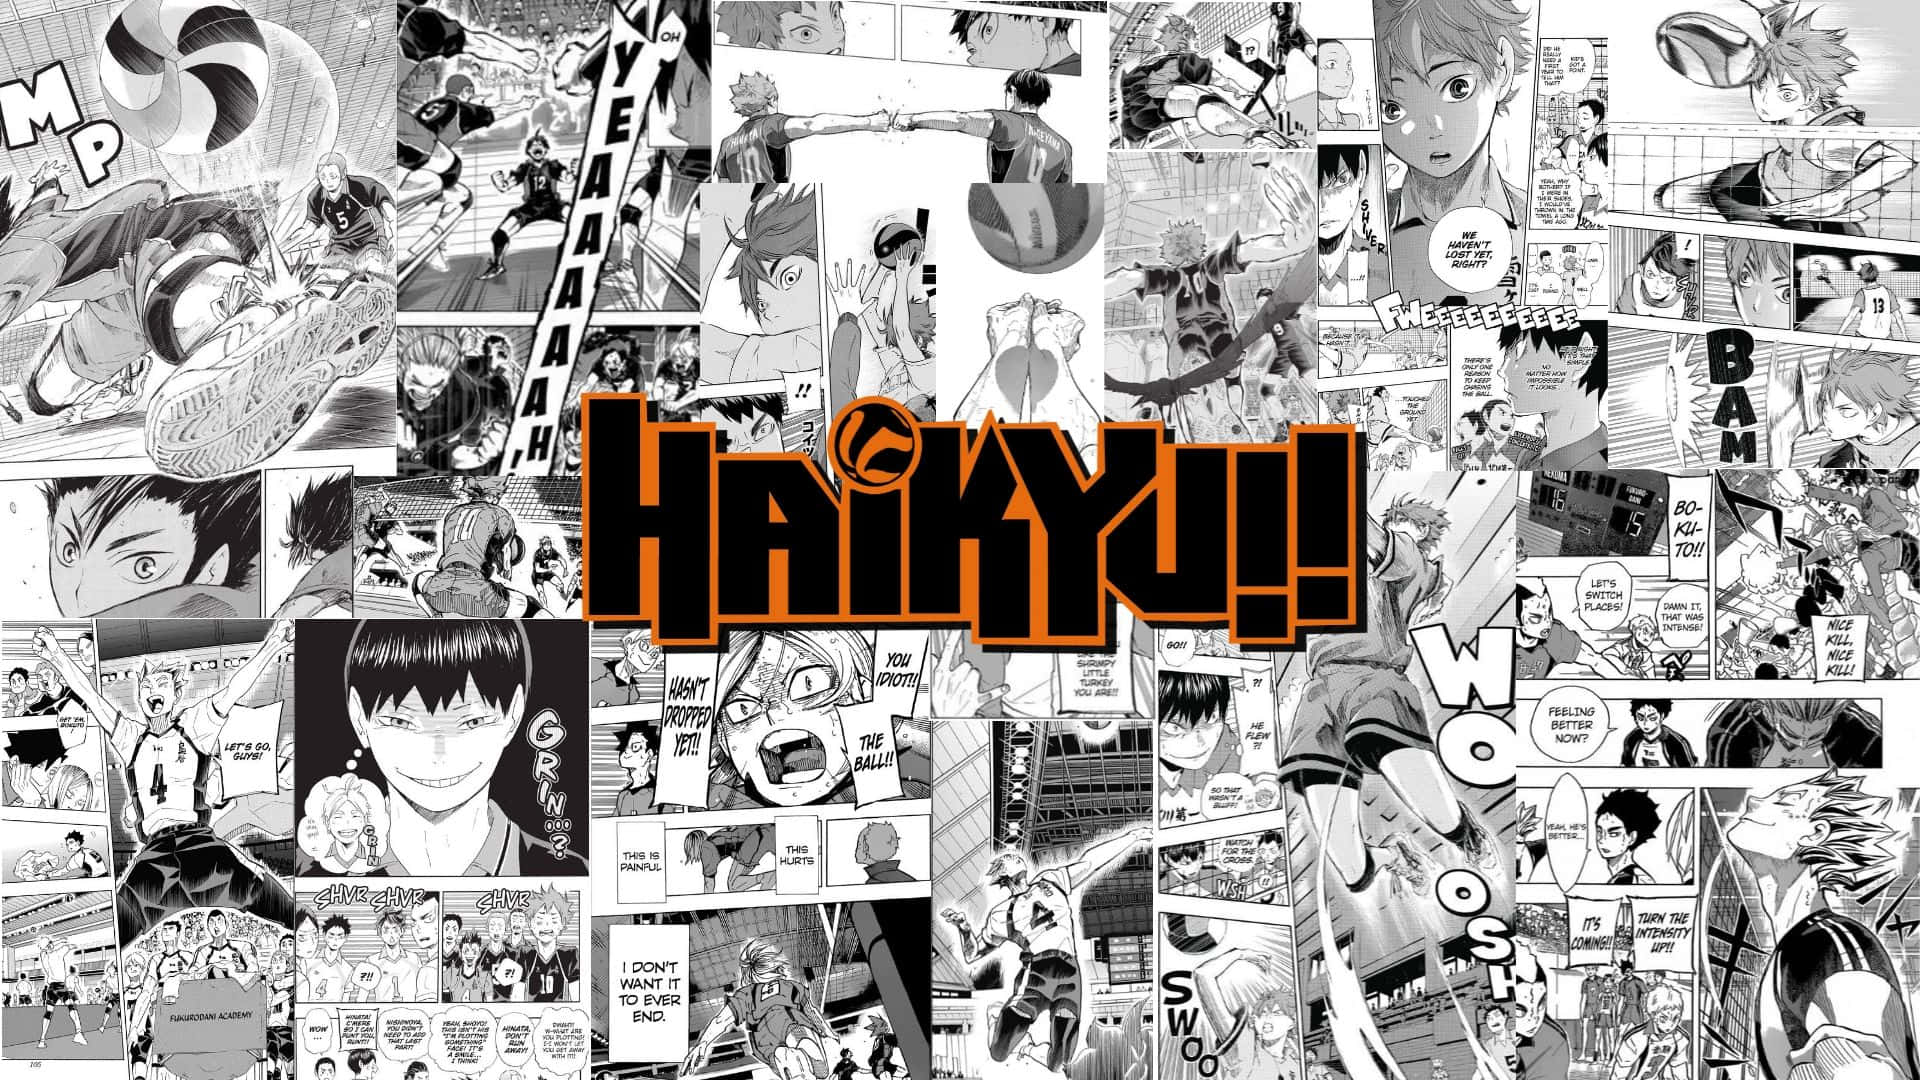 Aesthetic Desktop featuring the manga/anime 'Haikyuu!' Wallpaper